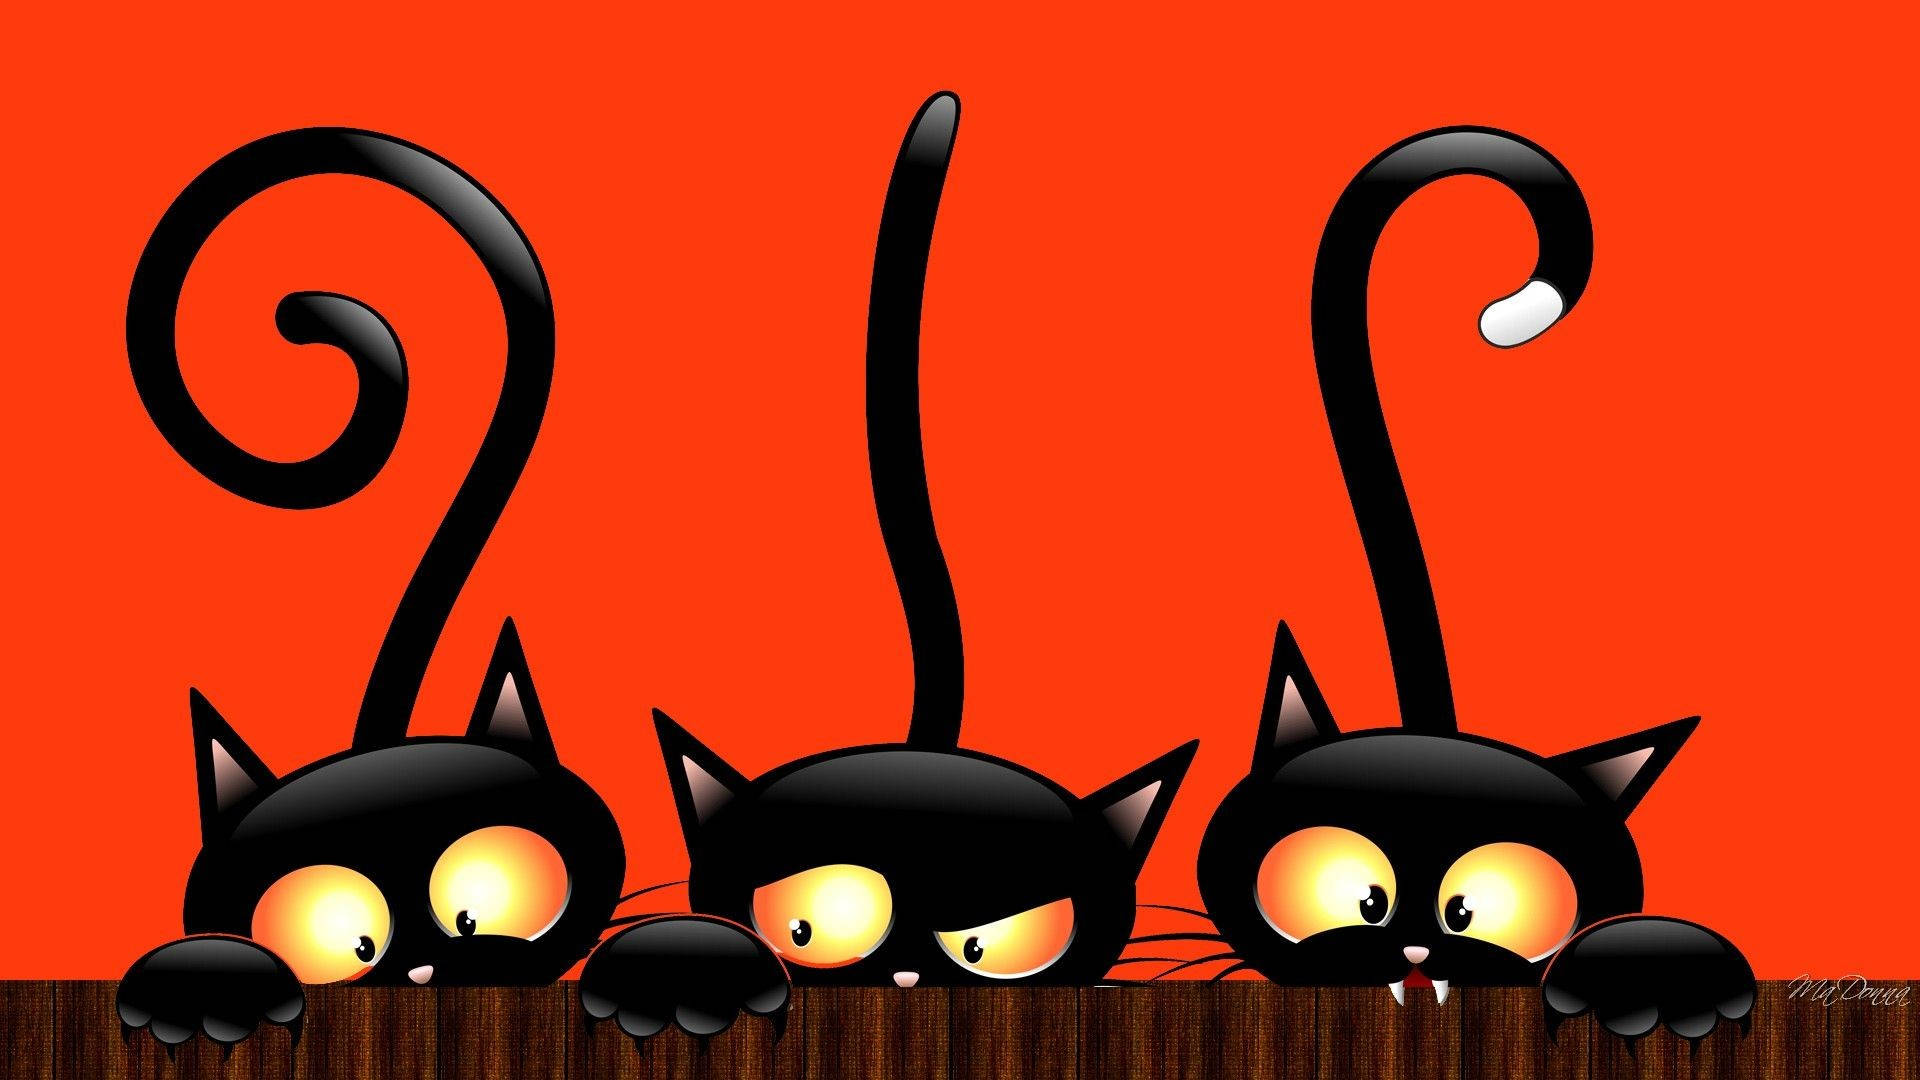 Caption: Gleeful Gathering Of Cute Black Cartoon Cats On A Laptop